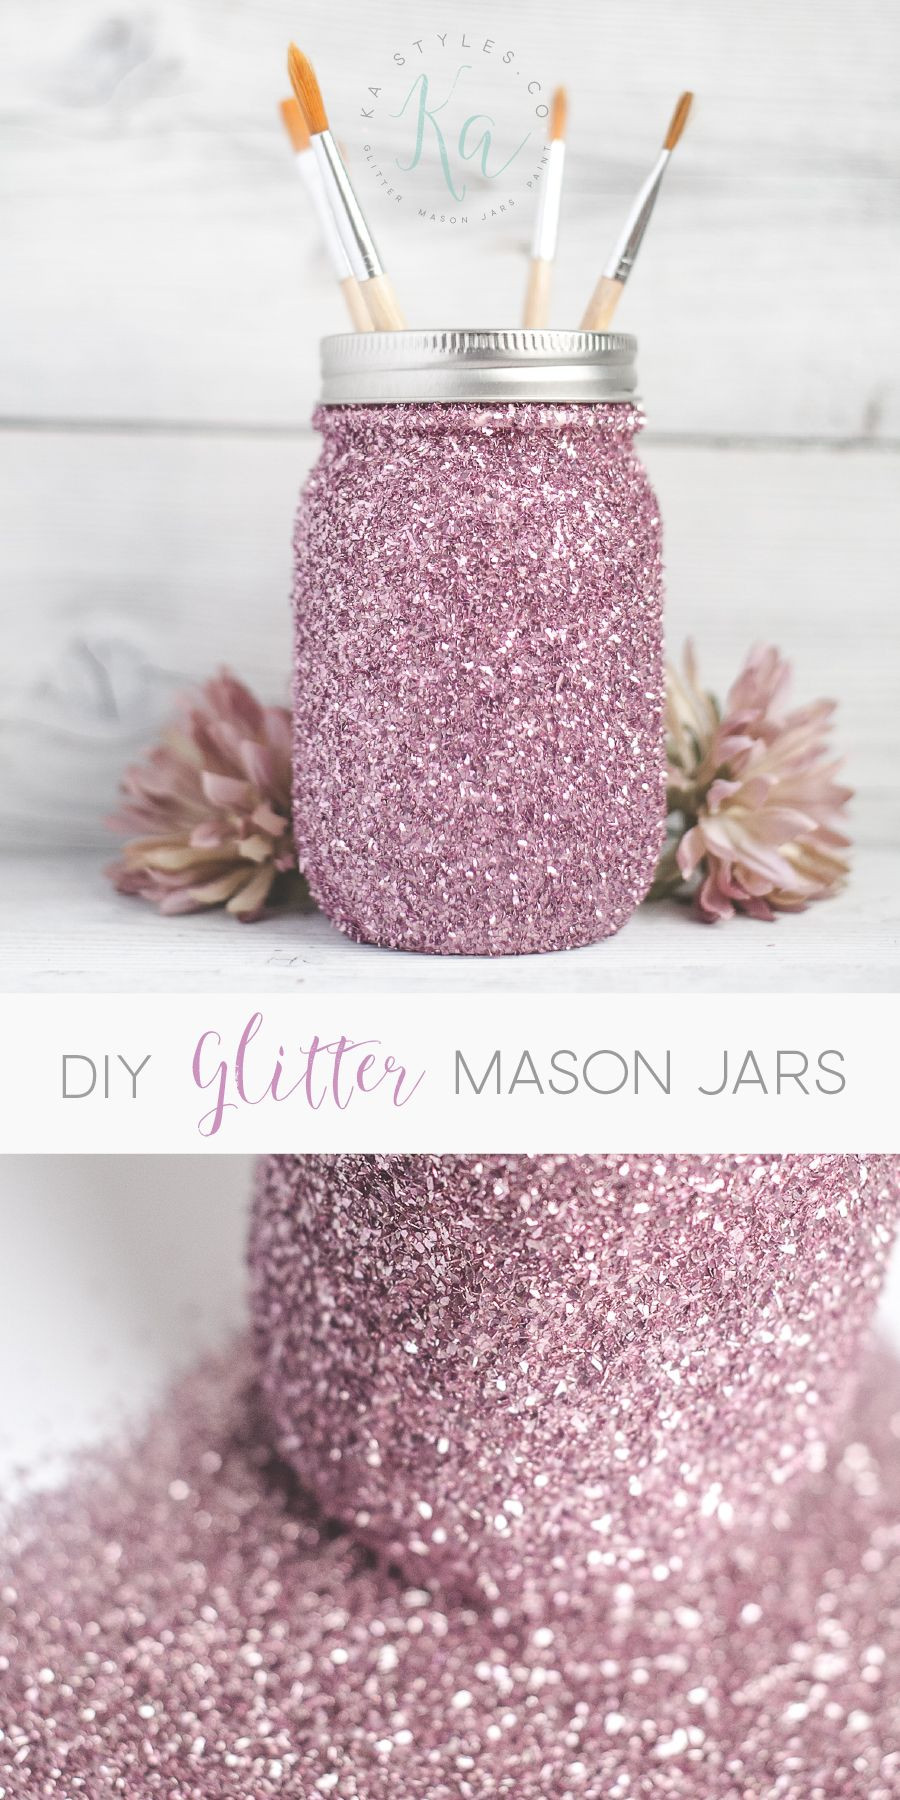 Best ideas about Mason Jar DIY
. Save or Pin DIY Glitter Mason Jar Tutorial Now.